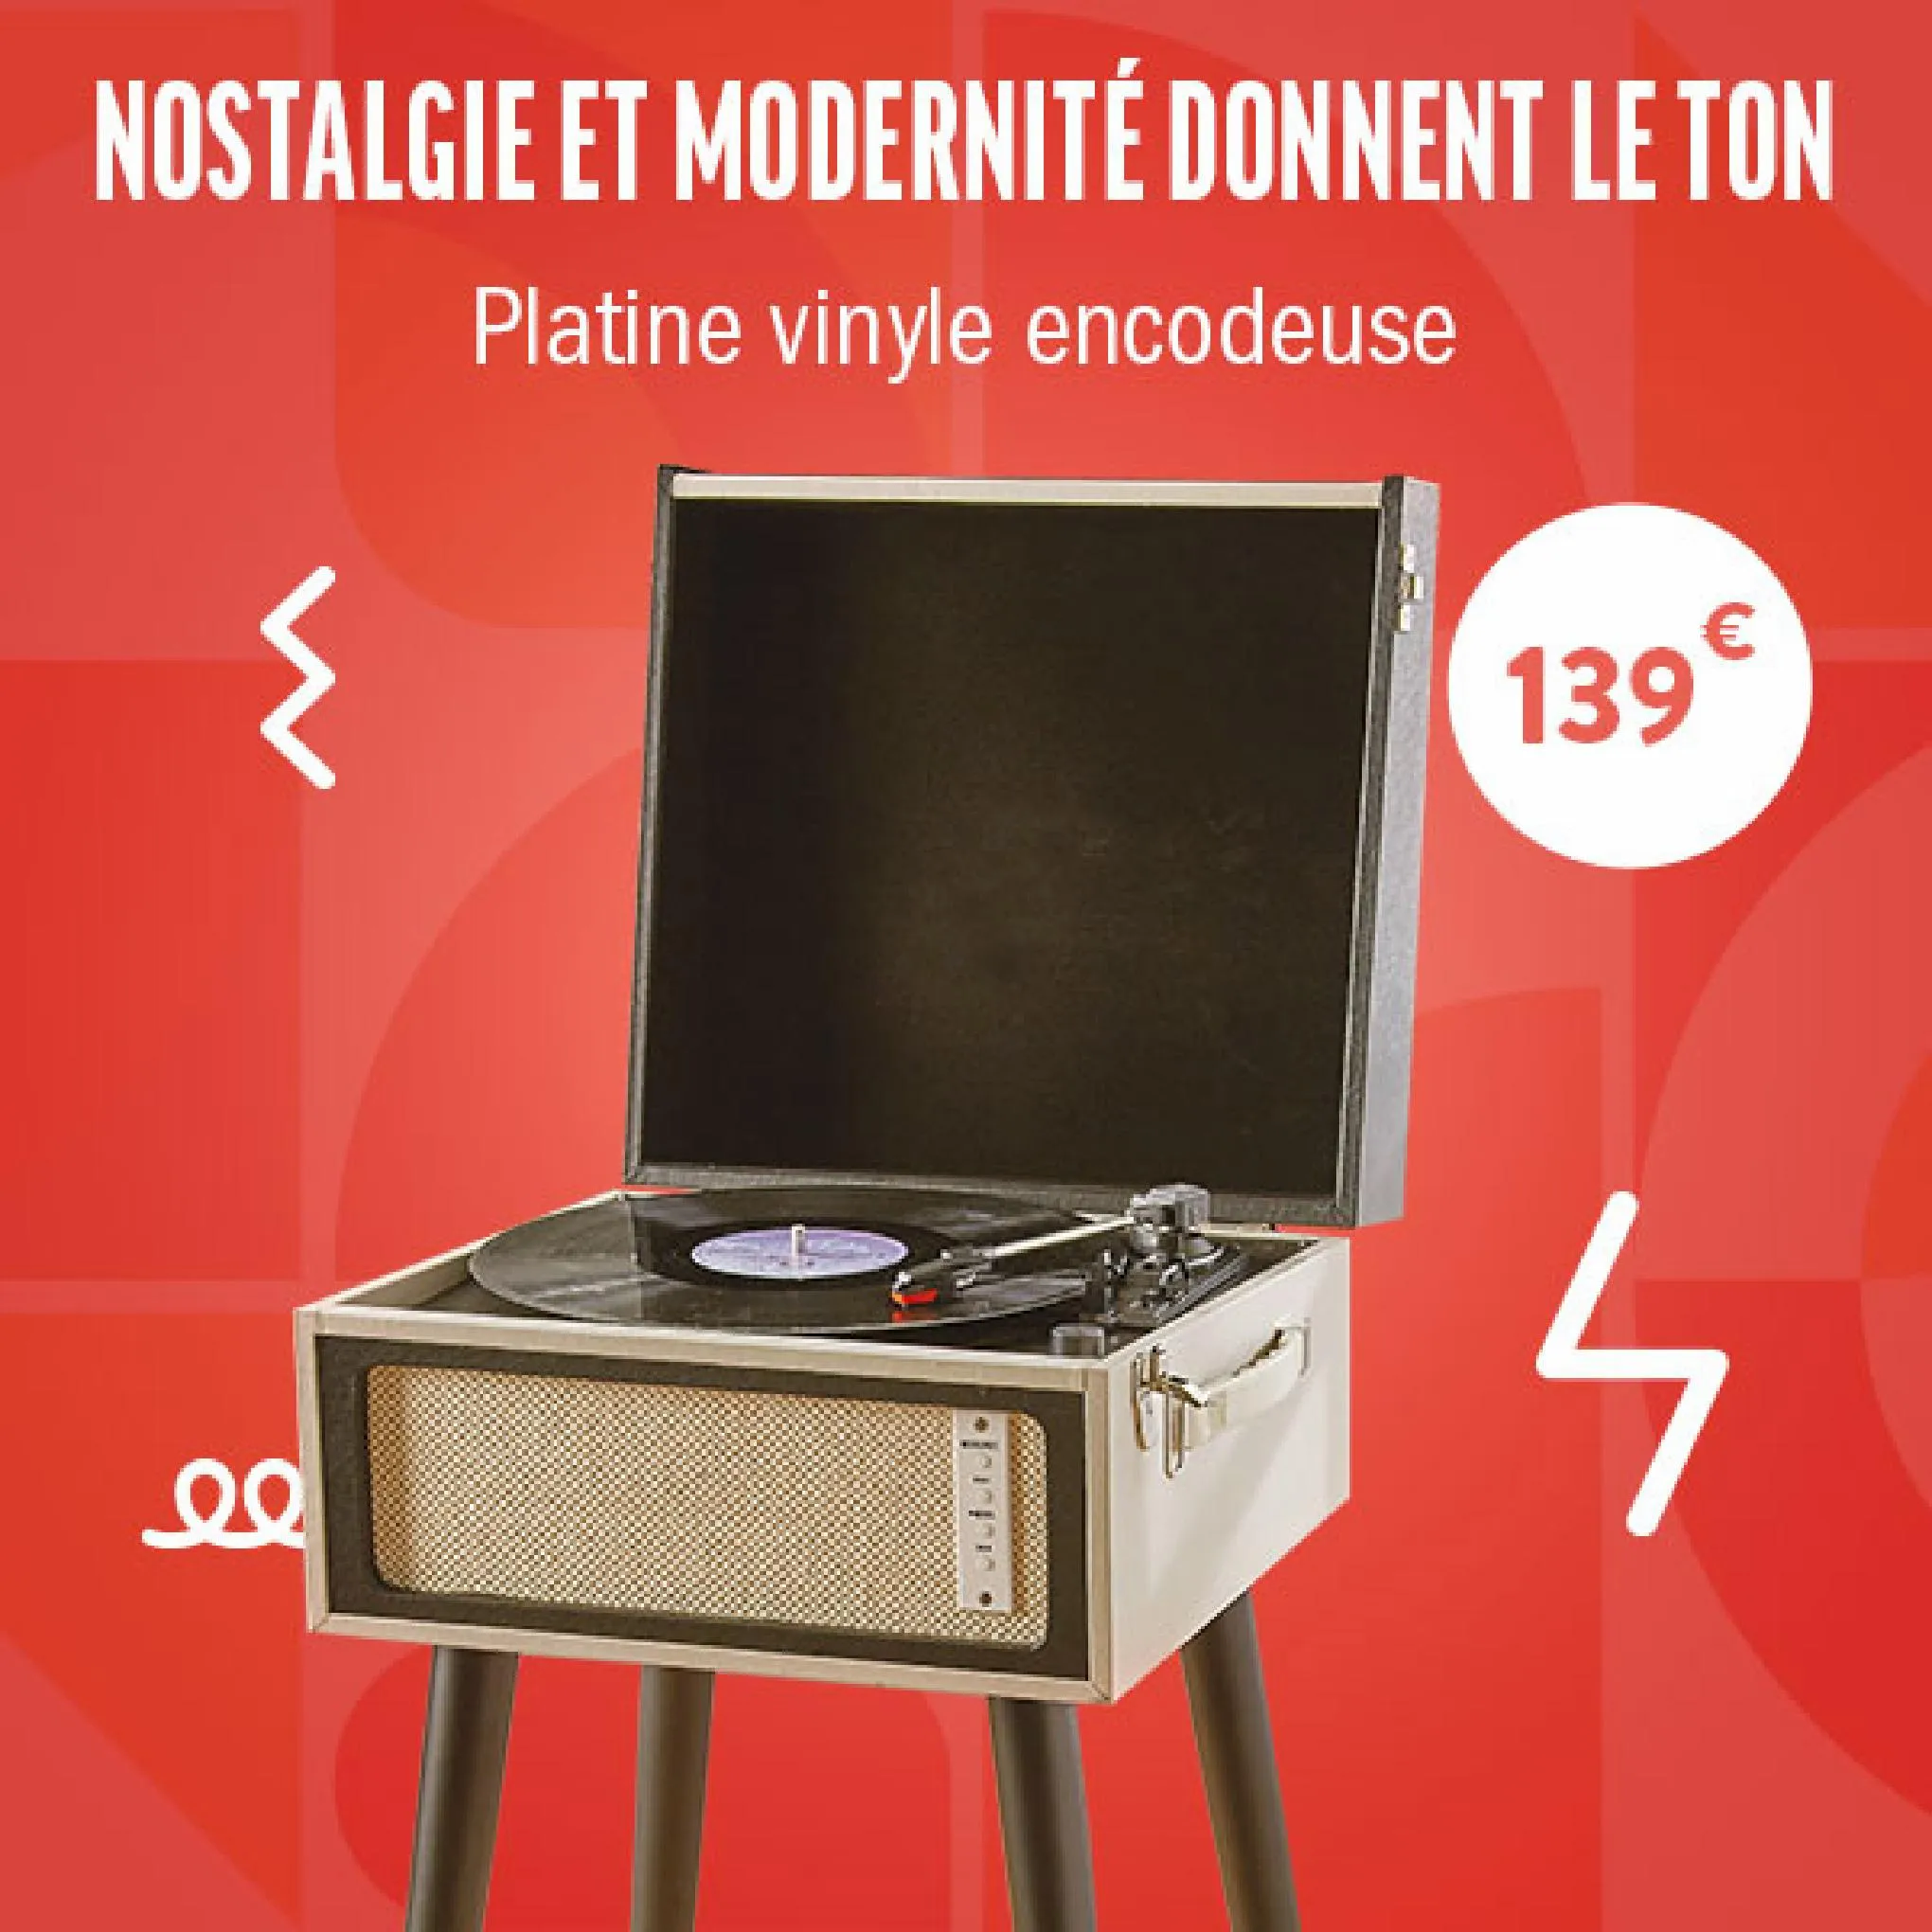 Catalogue Offres L'Homme Moderne, page 00002